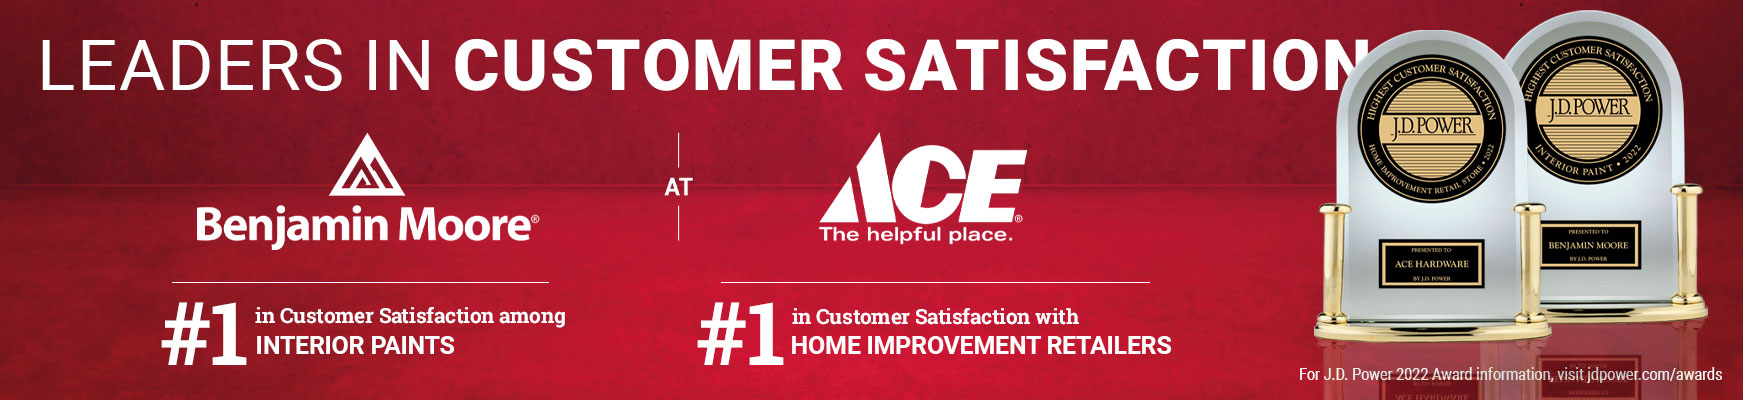 Benjamin Moore, Ace, leaders in customer satisfaction